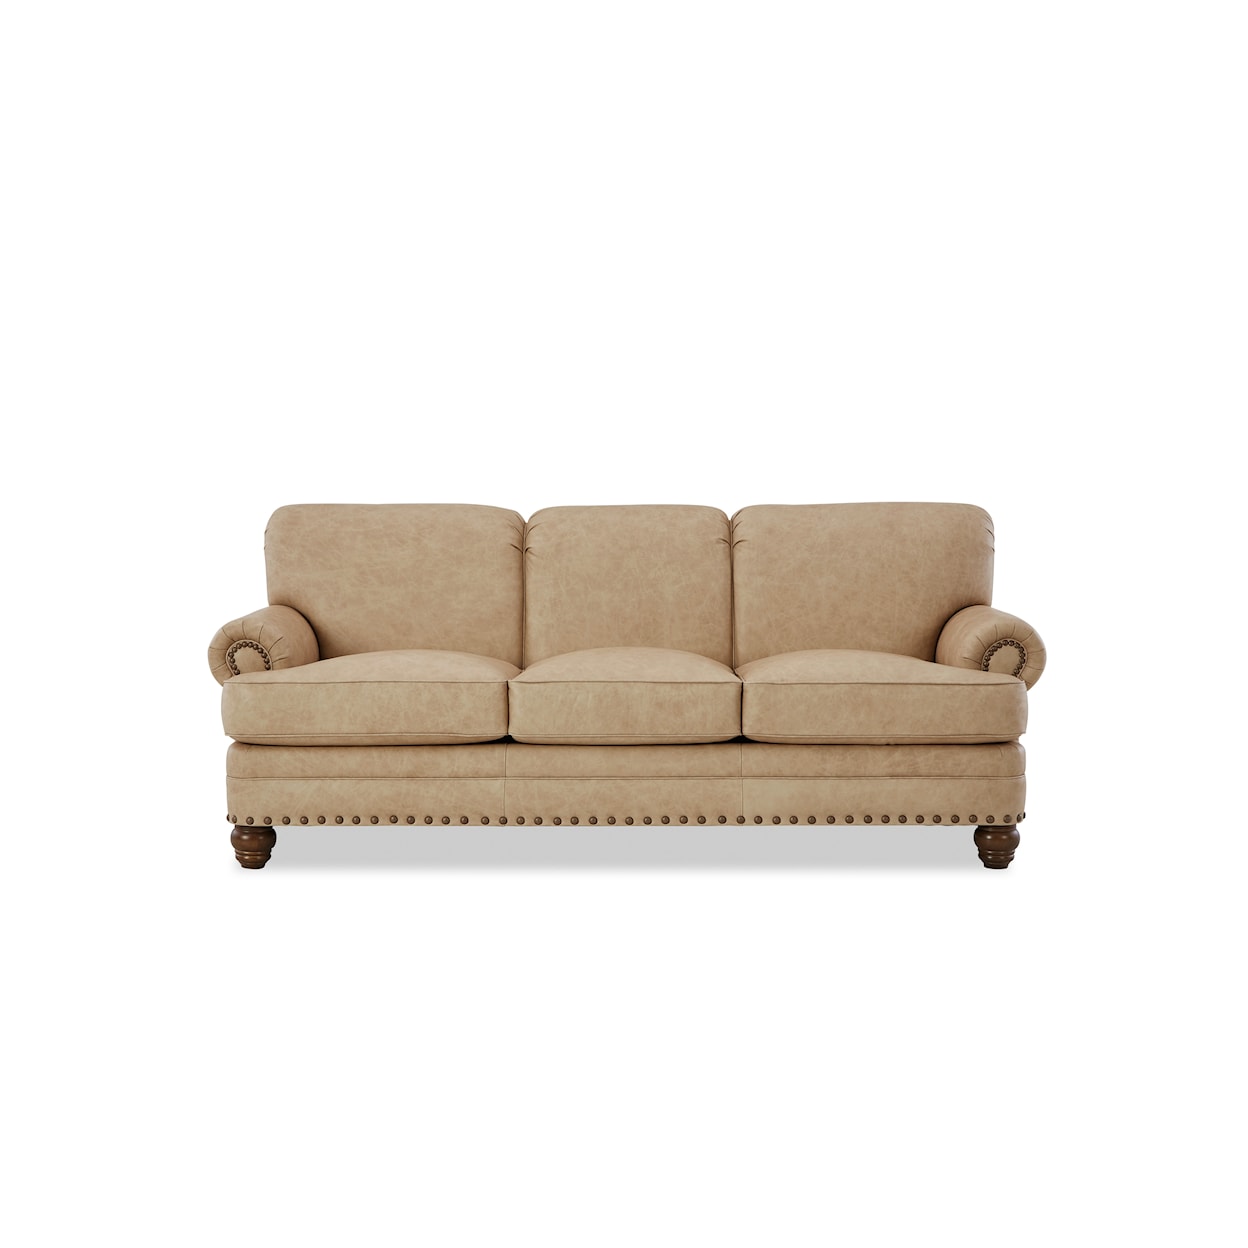 Craftmaster L728150 Leather Sofa